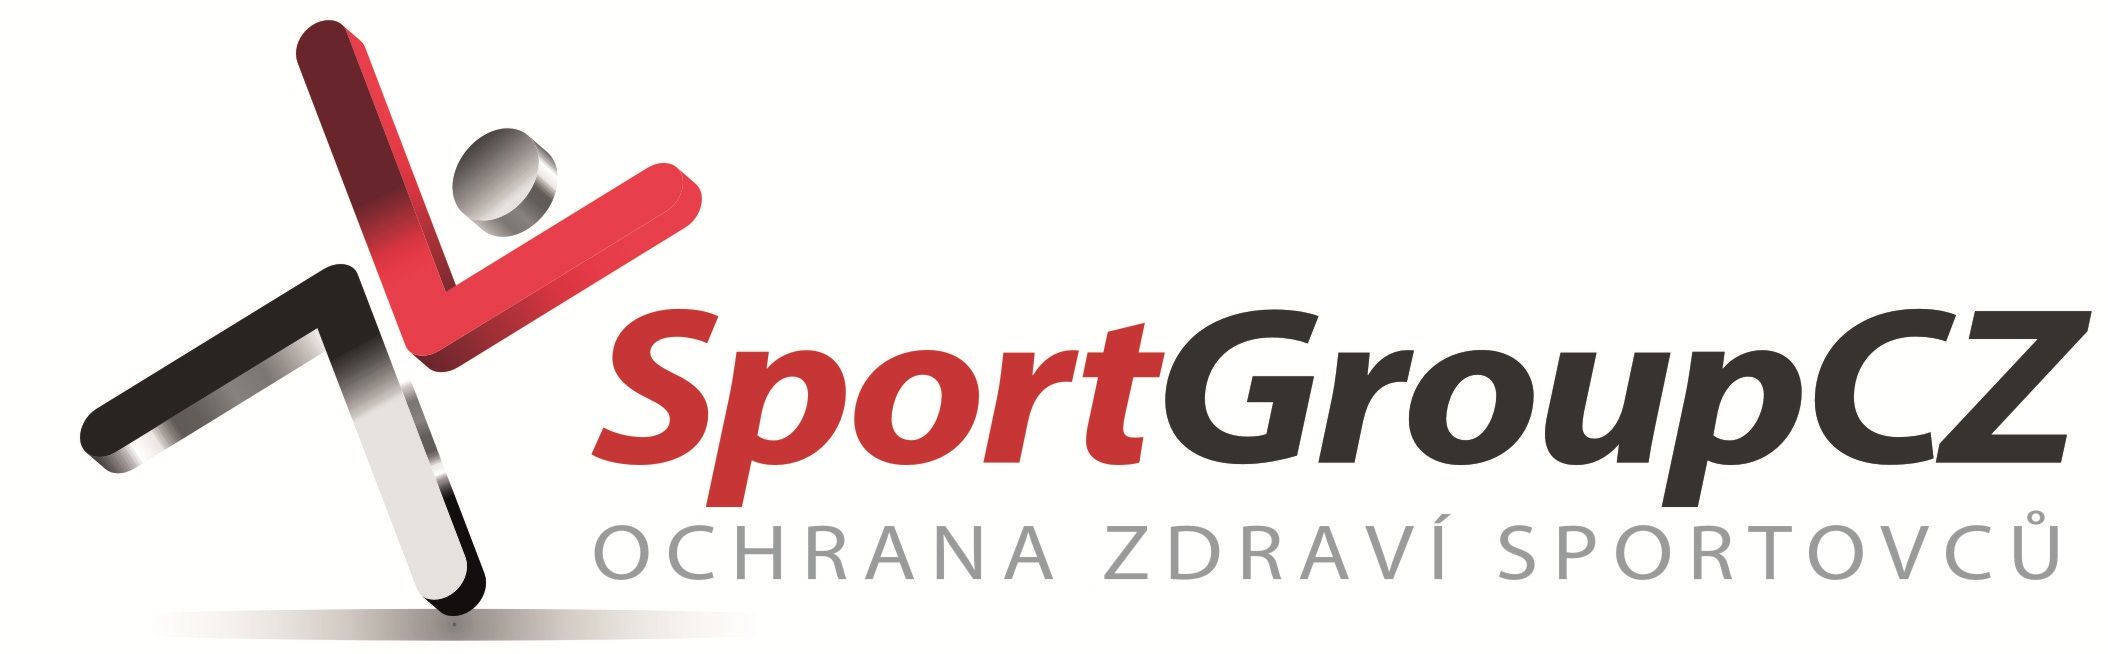 sport group logo corel draw